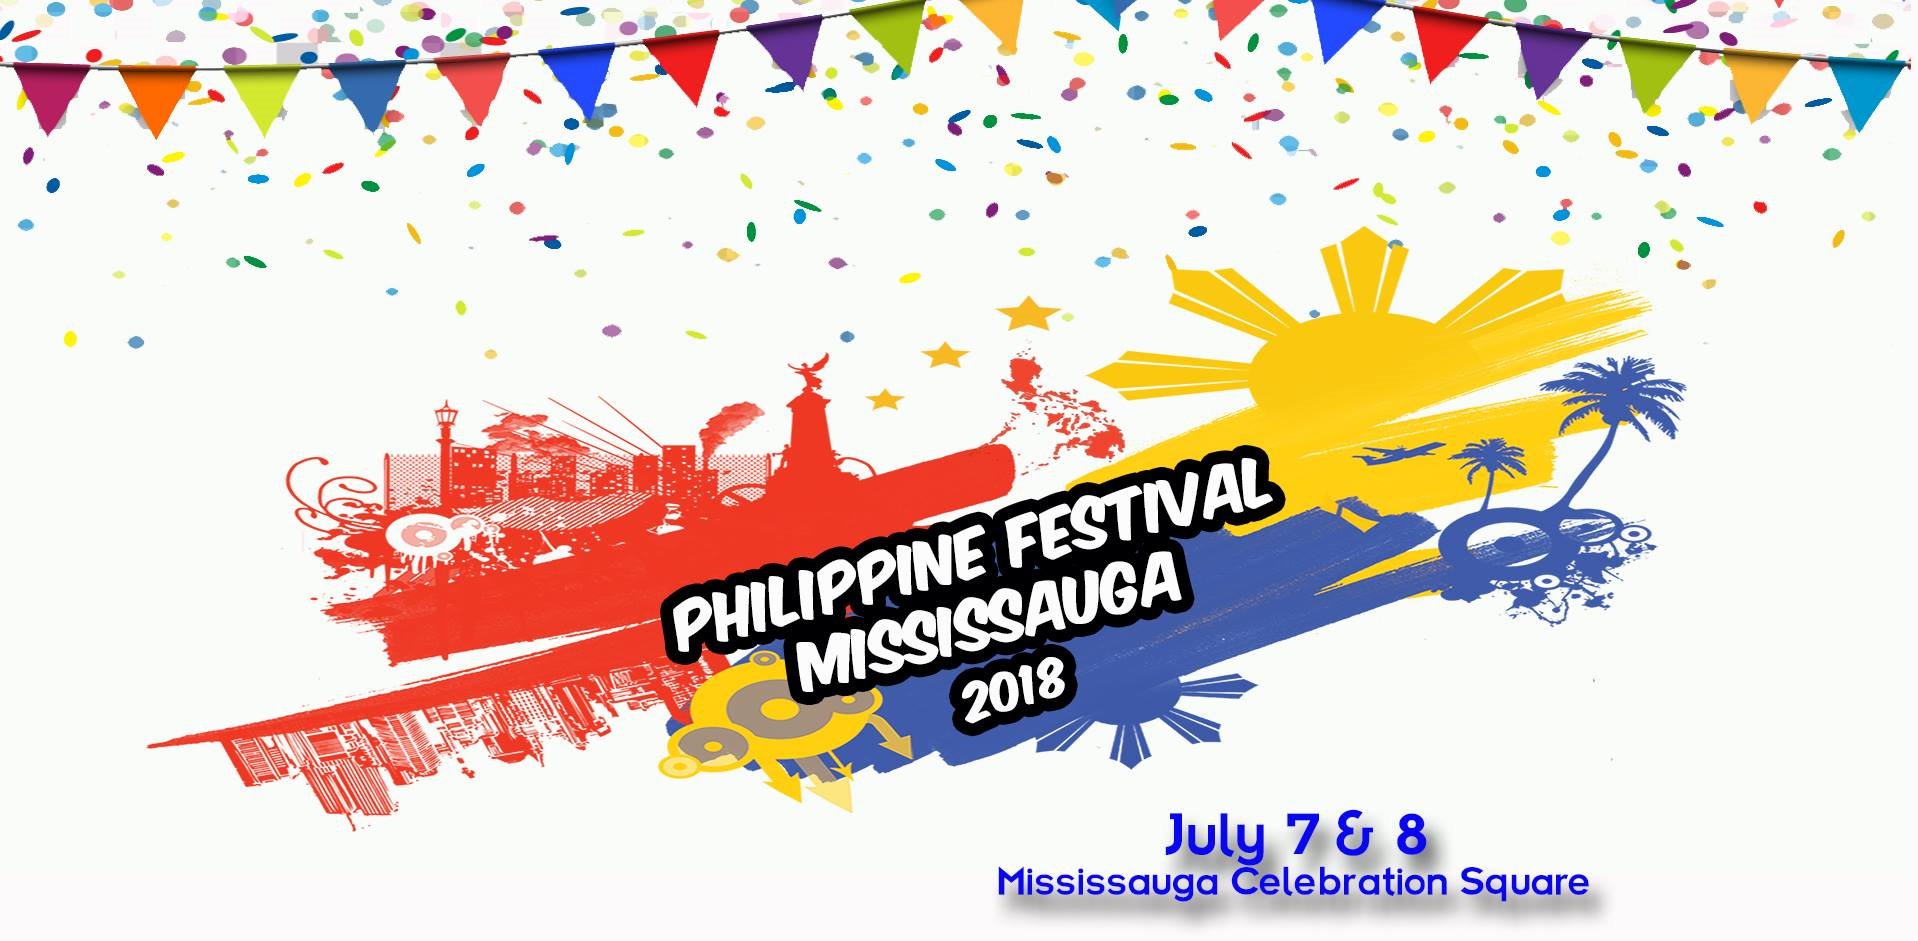 Philippine Festival Mississauga 2018 Google image from http://toronto.carpediem.cd/events/7070865-philippine-festival-mississauga-at-mississauga-celebration-square/